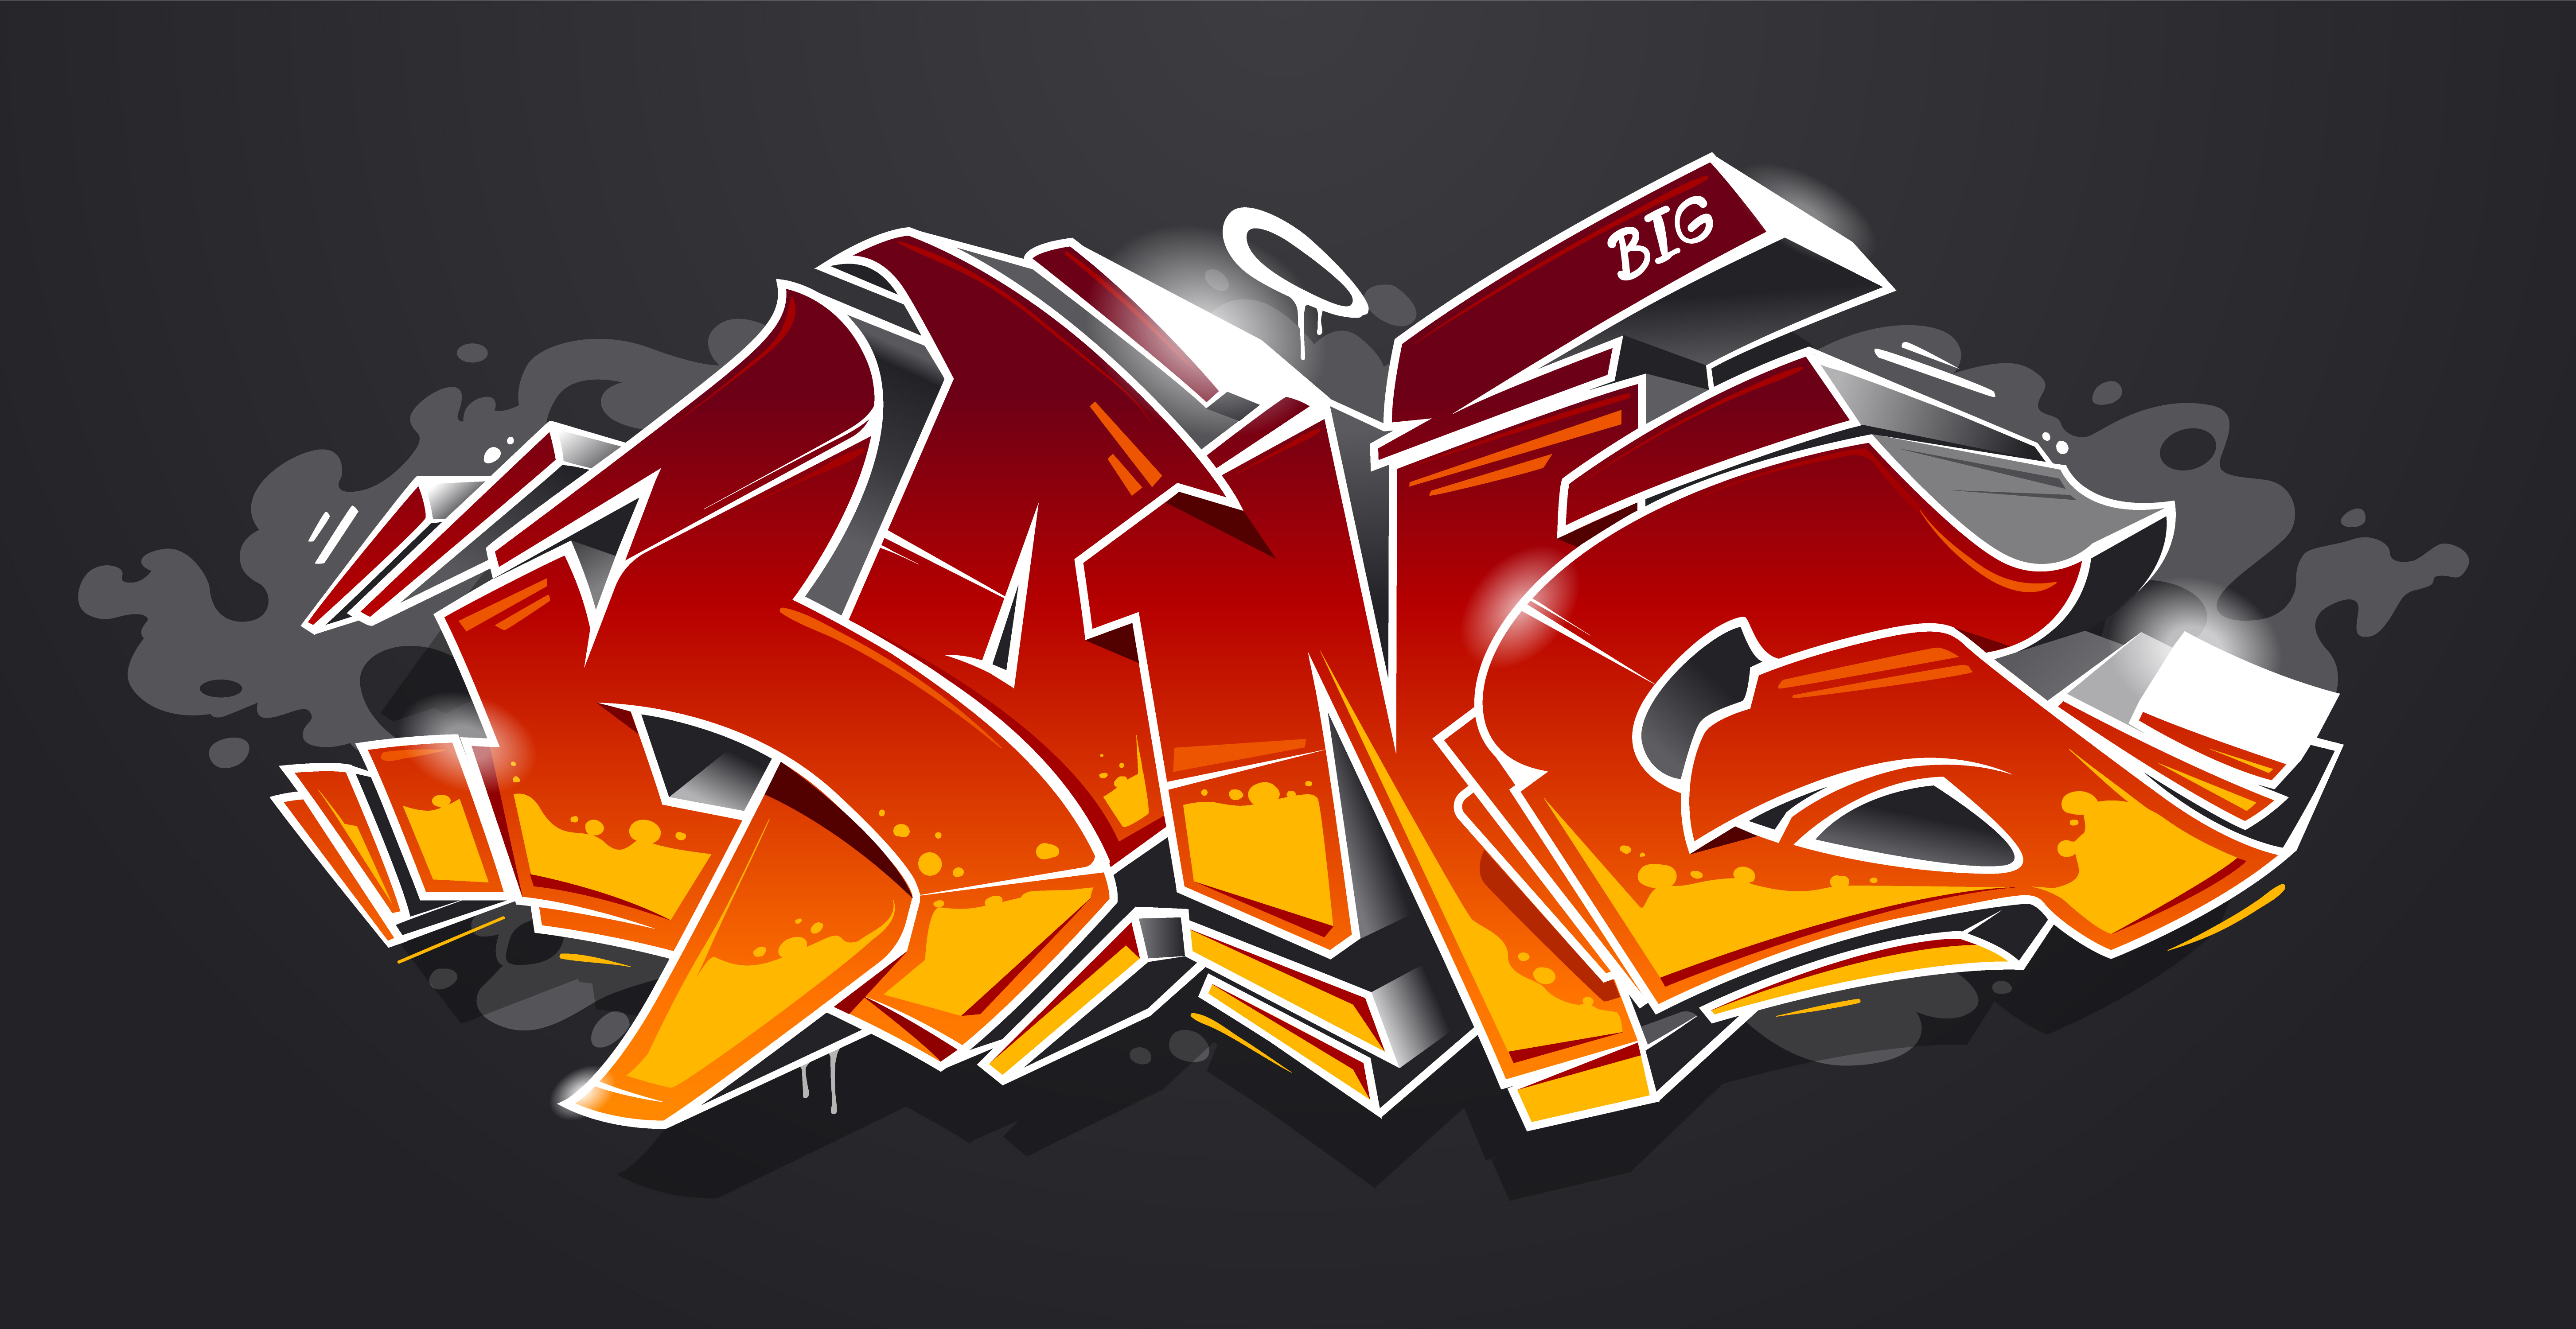 Bang 3d. Bang граффити. Банг в стиле граффити в стиле. Граффити взрыв. Граффити надпись Bang.